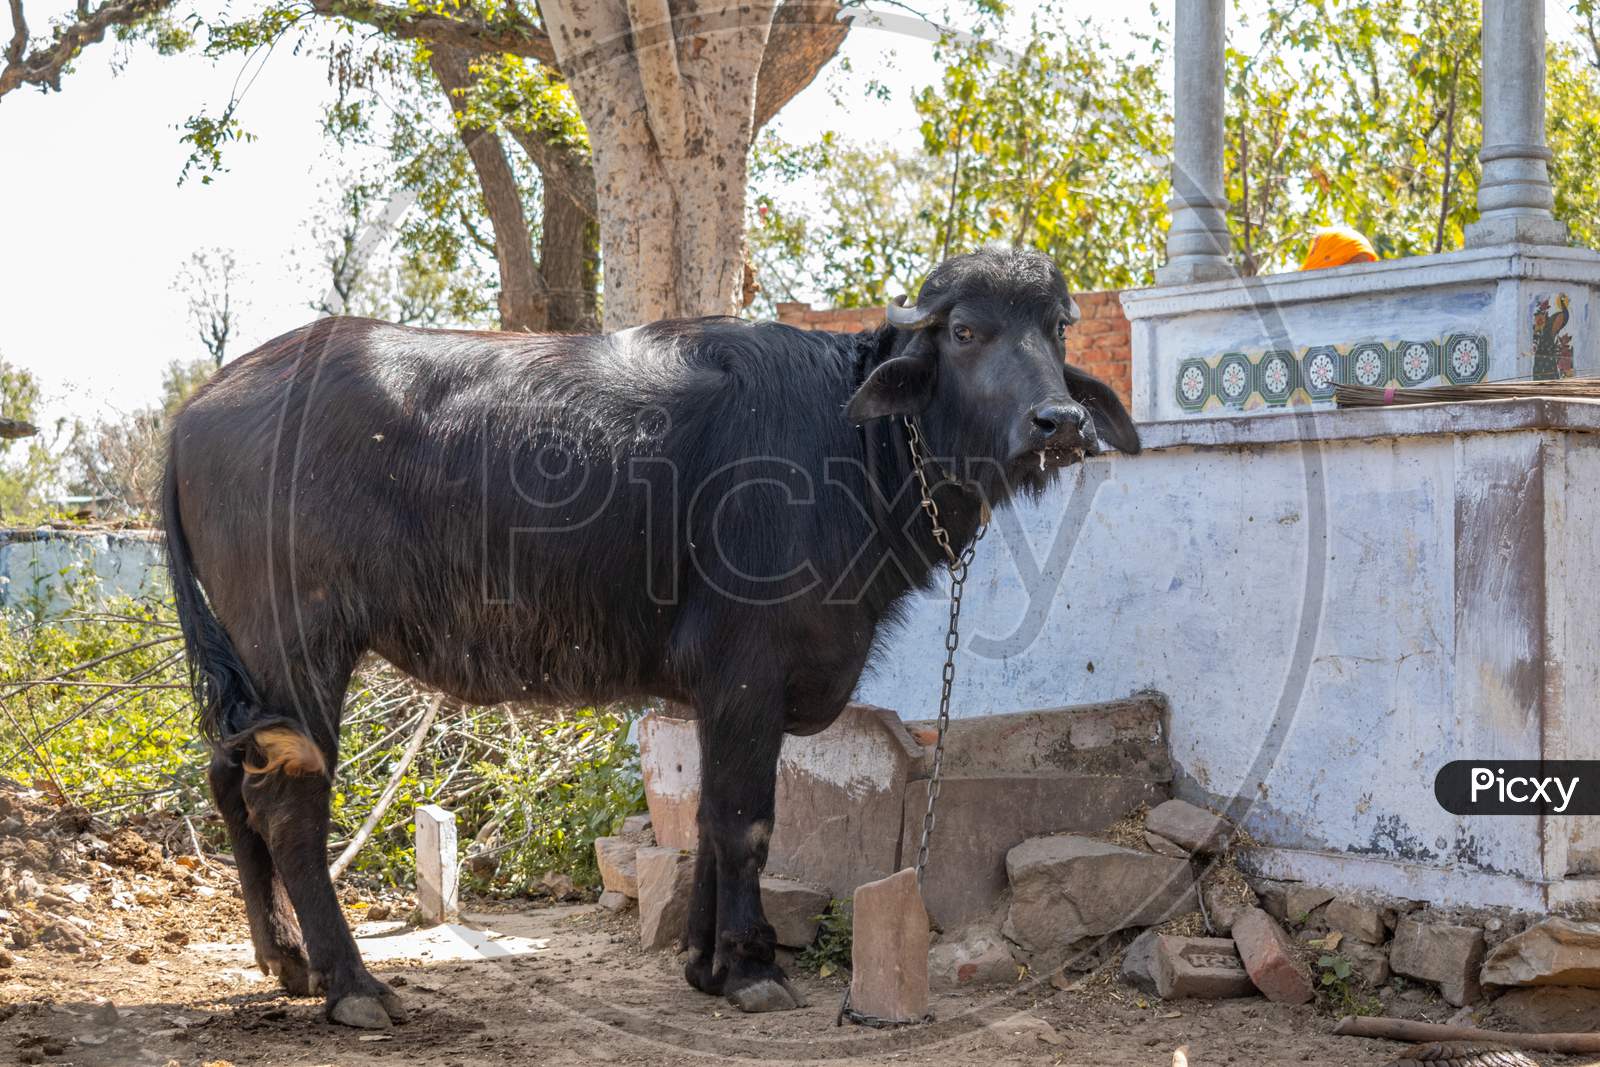 A buffalo at a farm in India